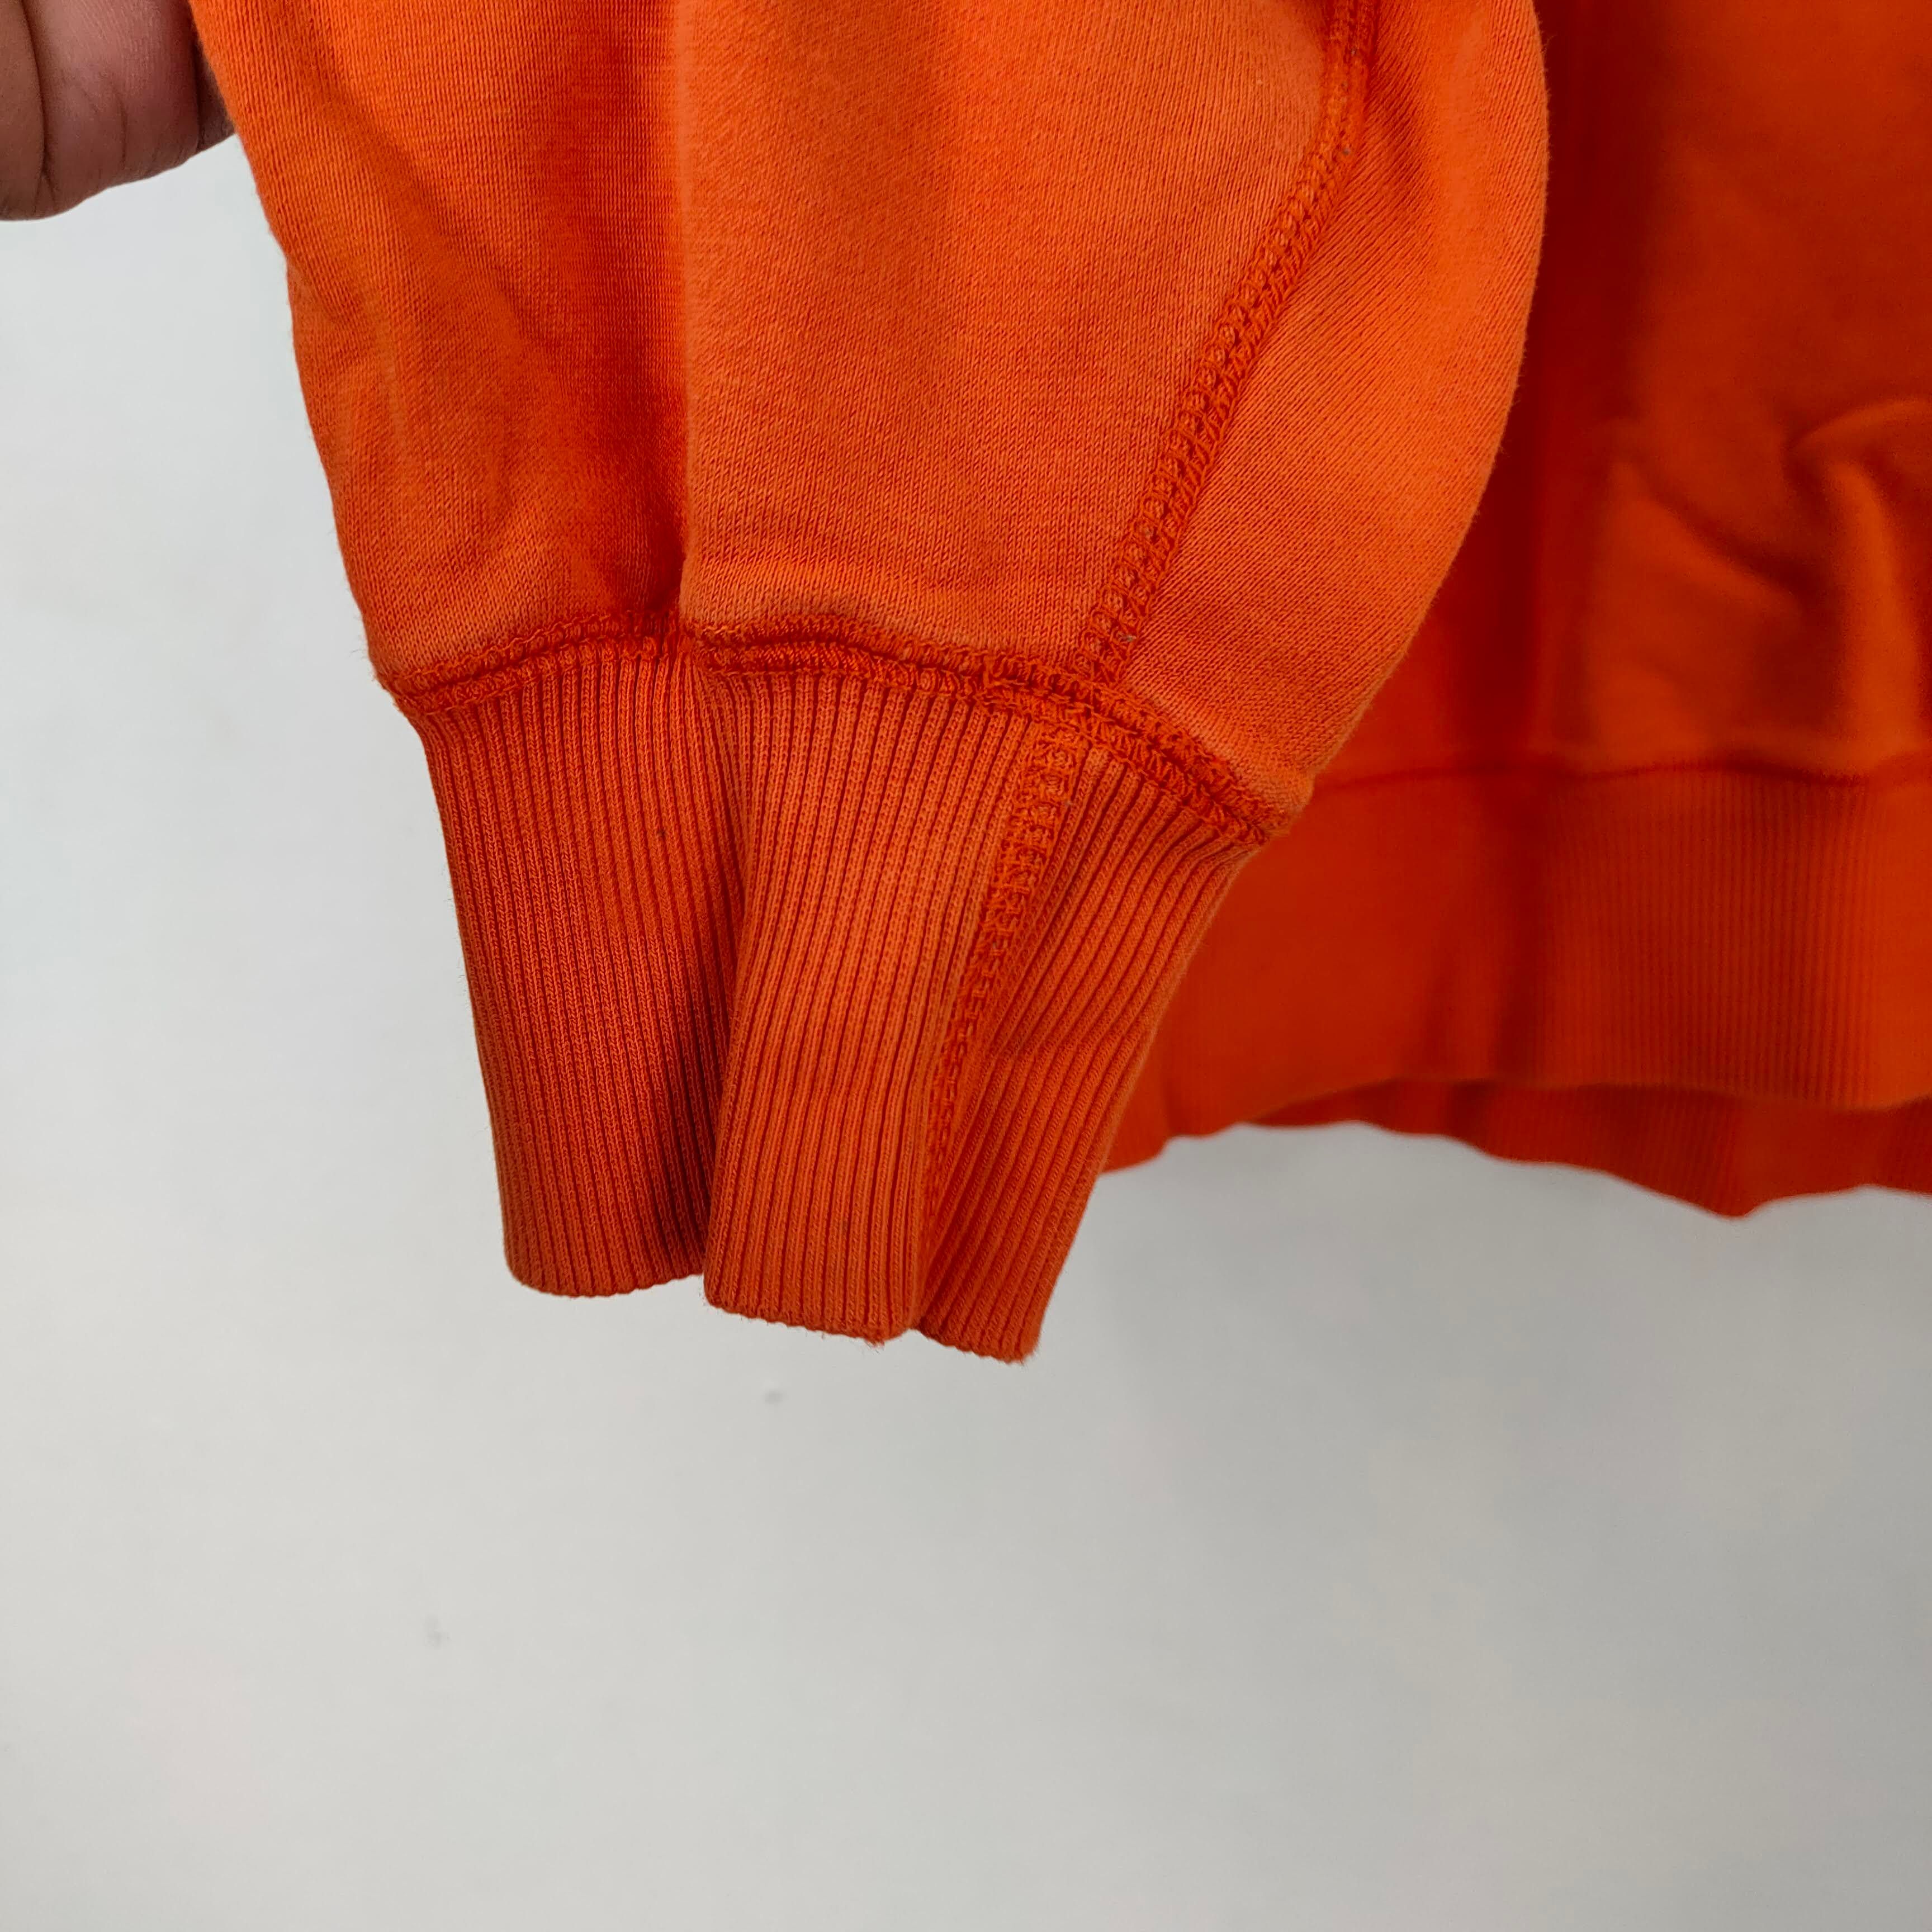 Uniqlo Uniqlo Orange Plain Sweatshirt niqlo Size US XL / EU 56 / 4 - 3 Thumbnail